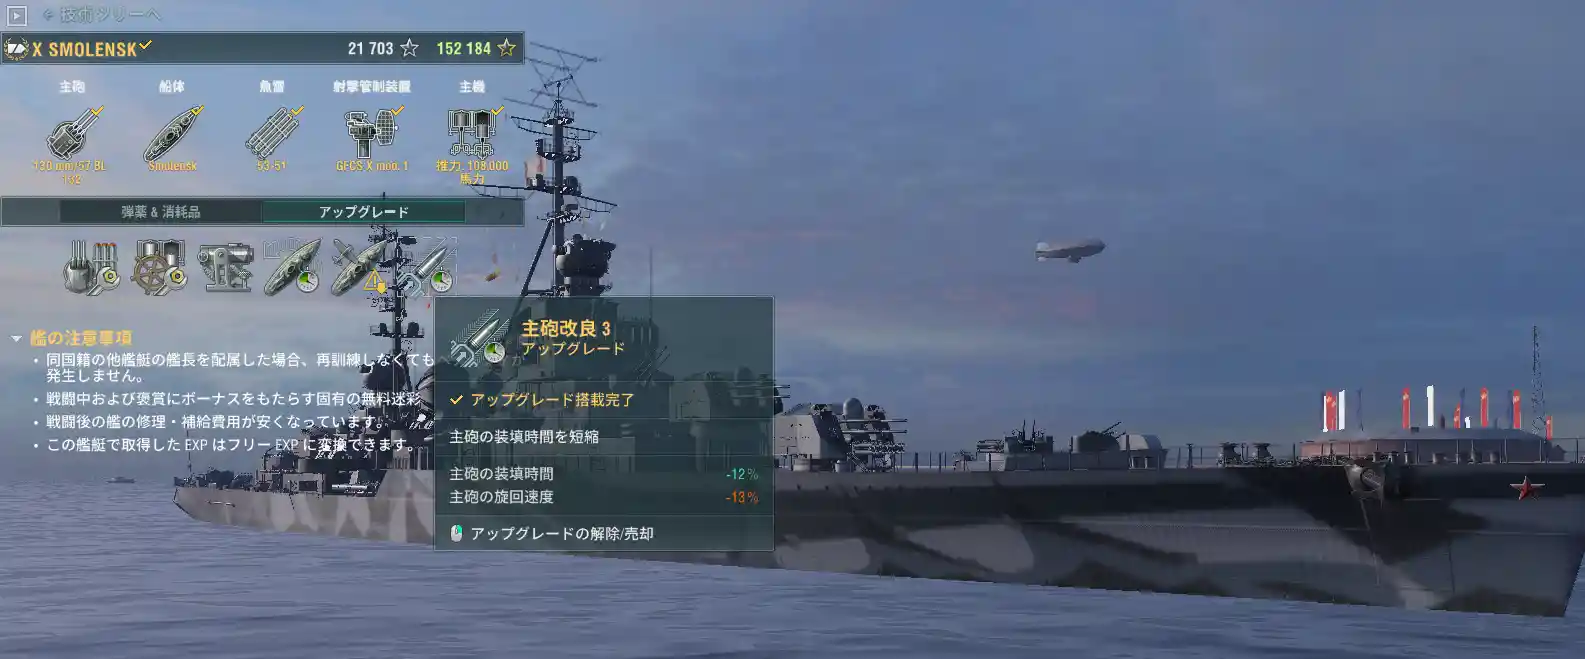 World of Warships 20.03.07 スモレンスクアップグレード内容.jpg